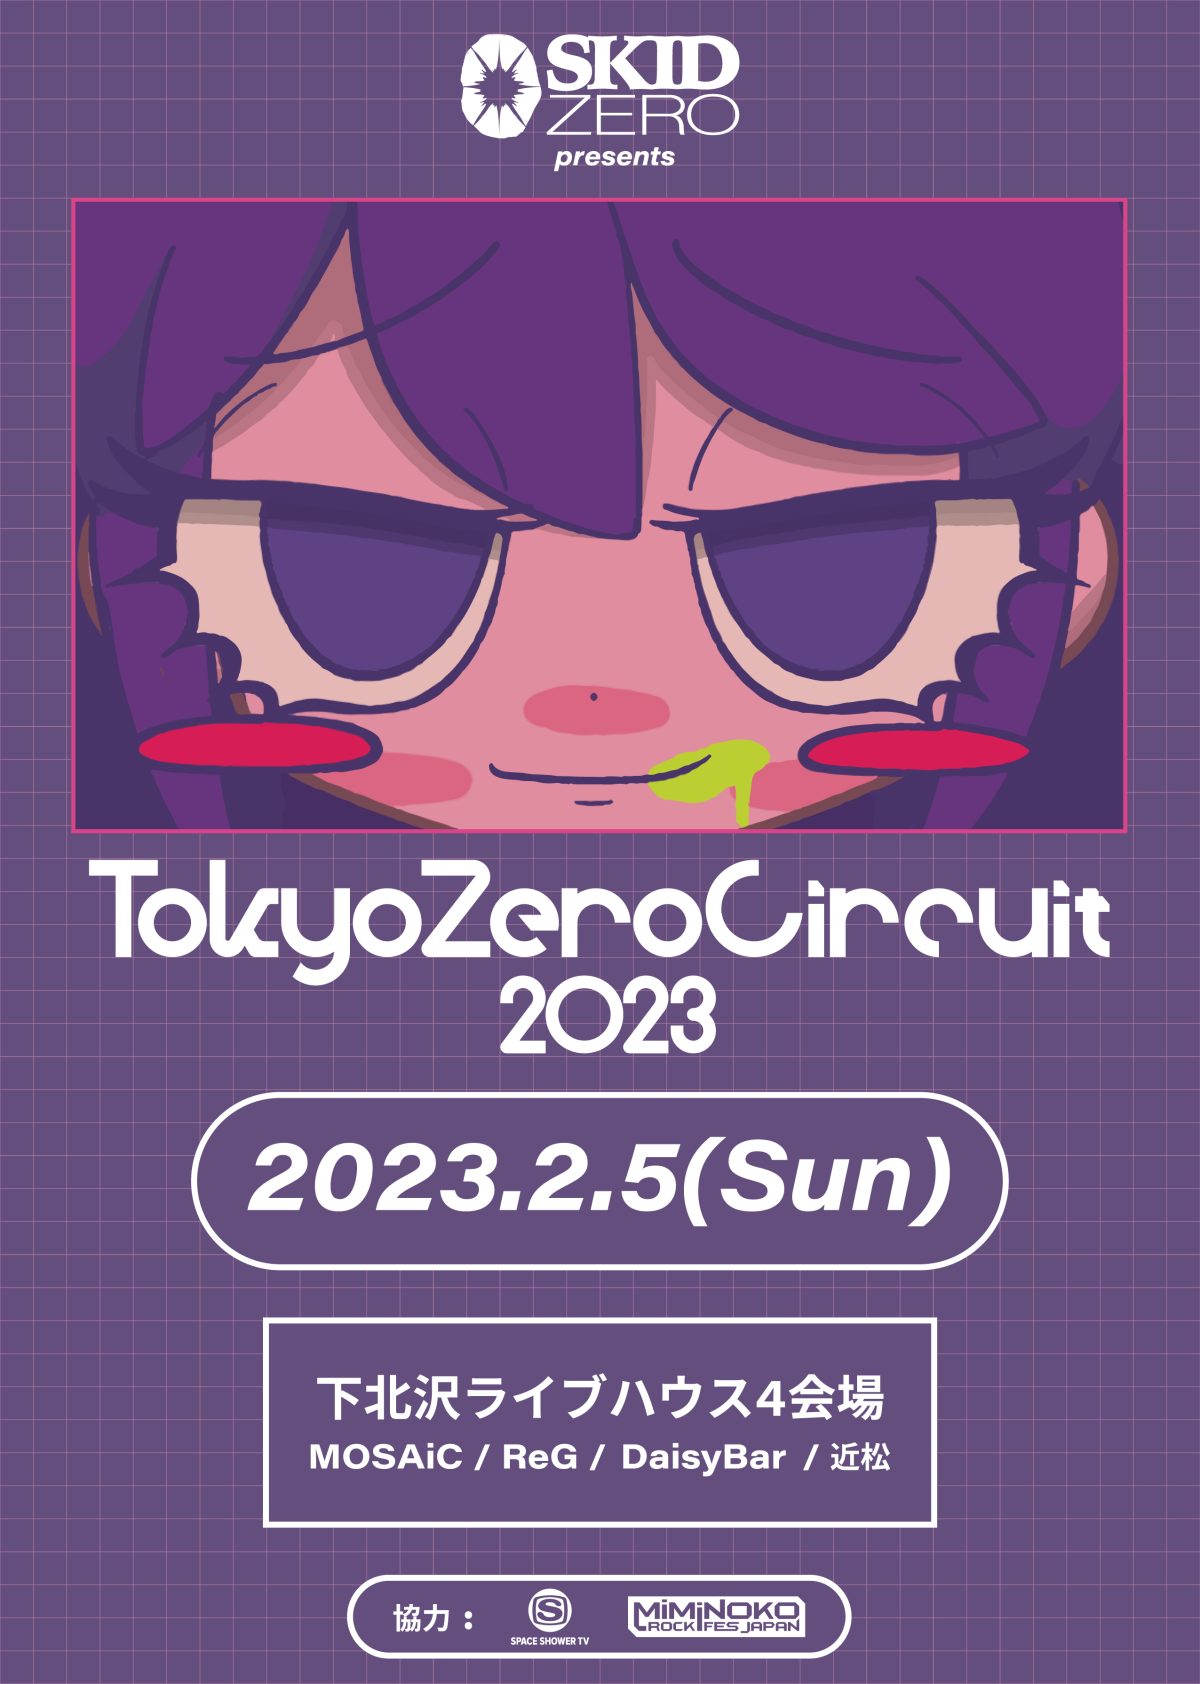 Artist Support Team “SKID ZERO”が主催するサーキット型ライブイベント”Tokyo Zero Circuit 2023”が来年2月5日(日)に下北沢4会場にて開催決定！ 本日よりチケット先着販売がスタート！